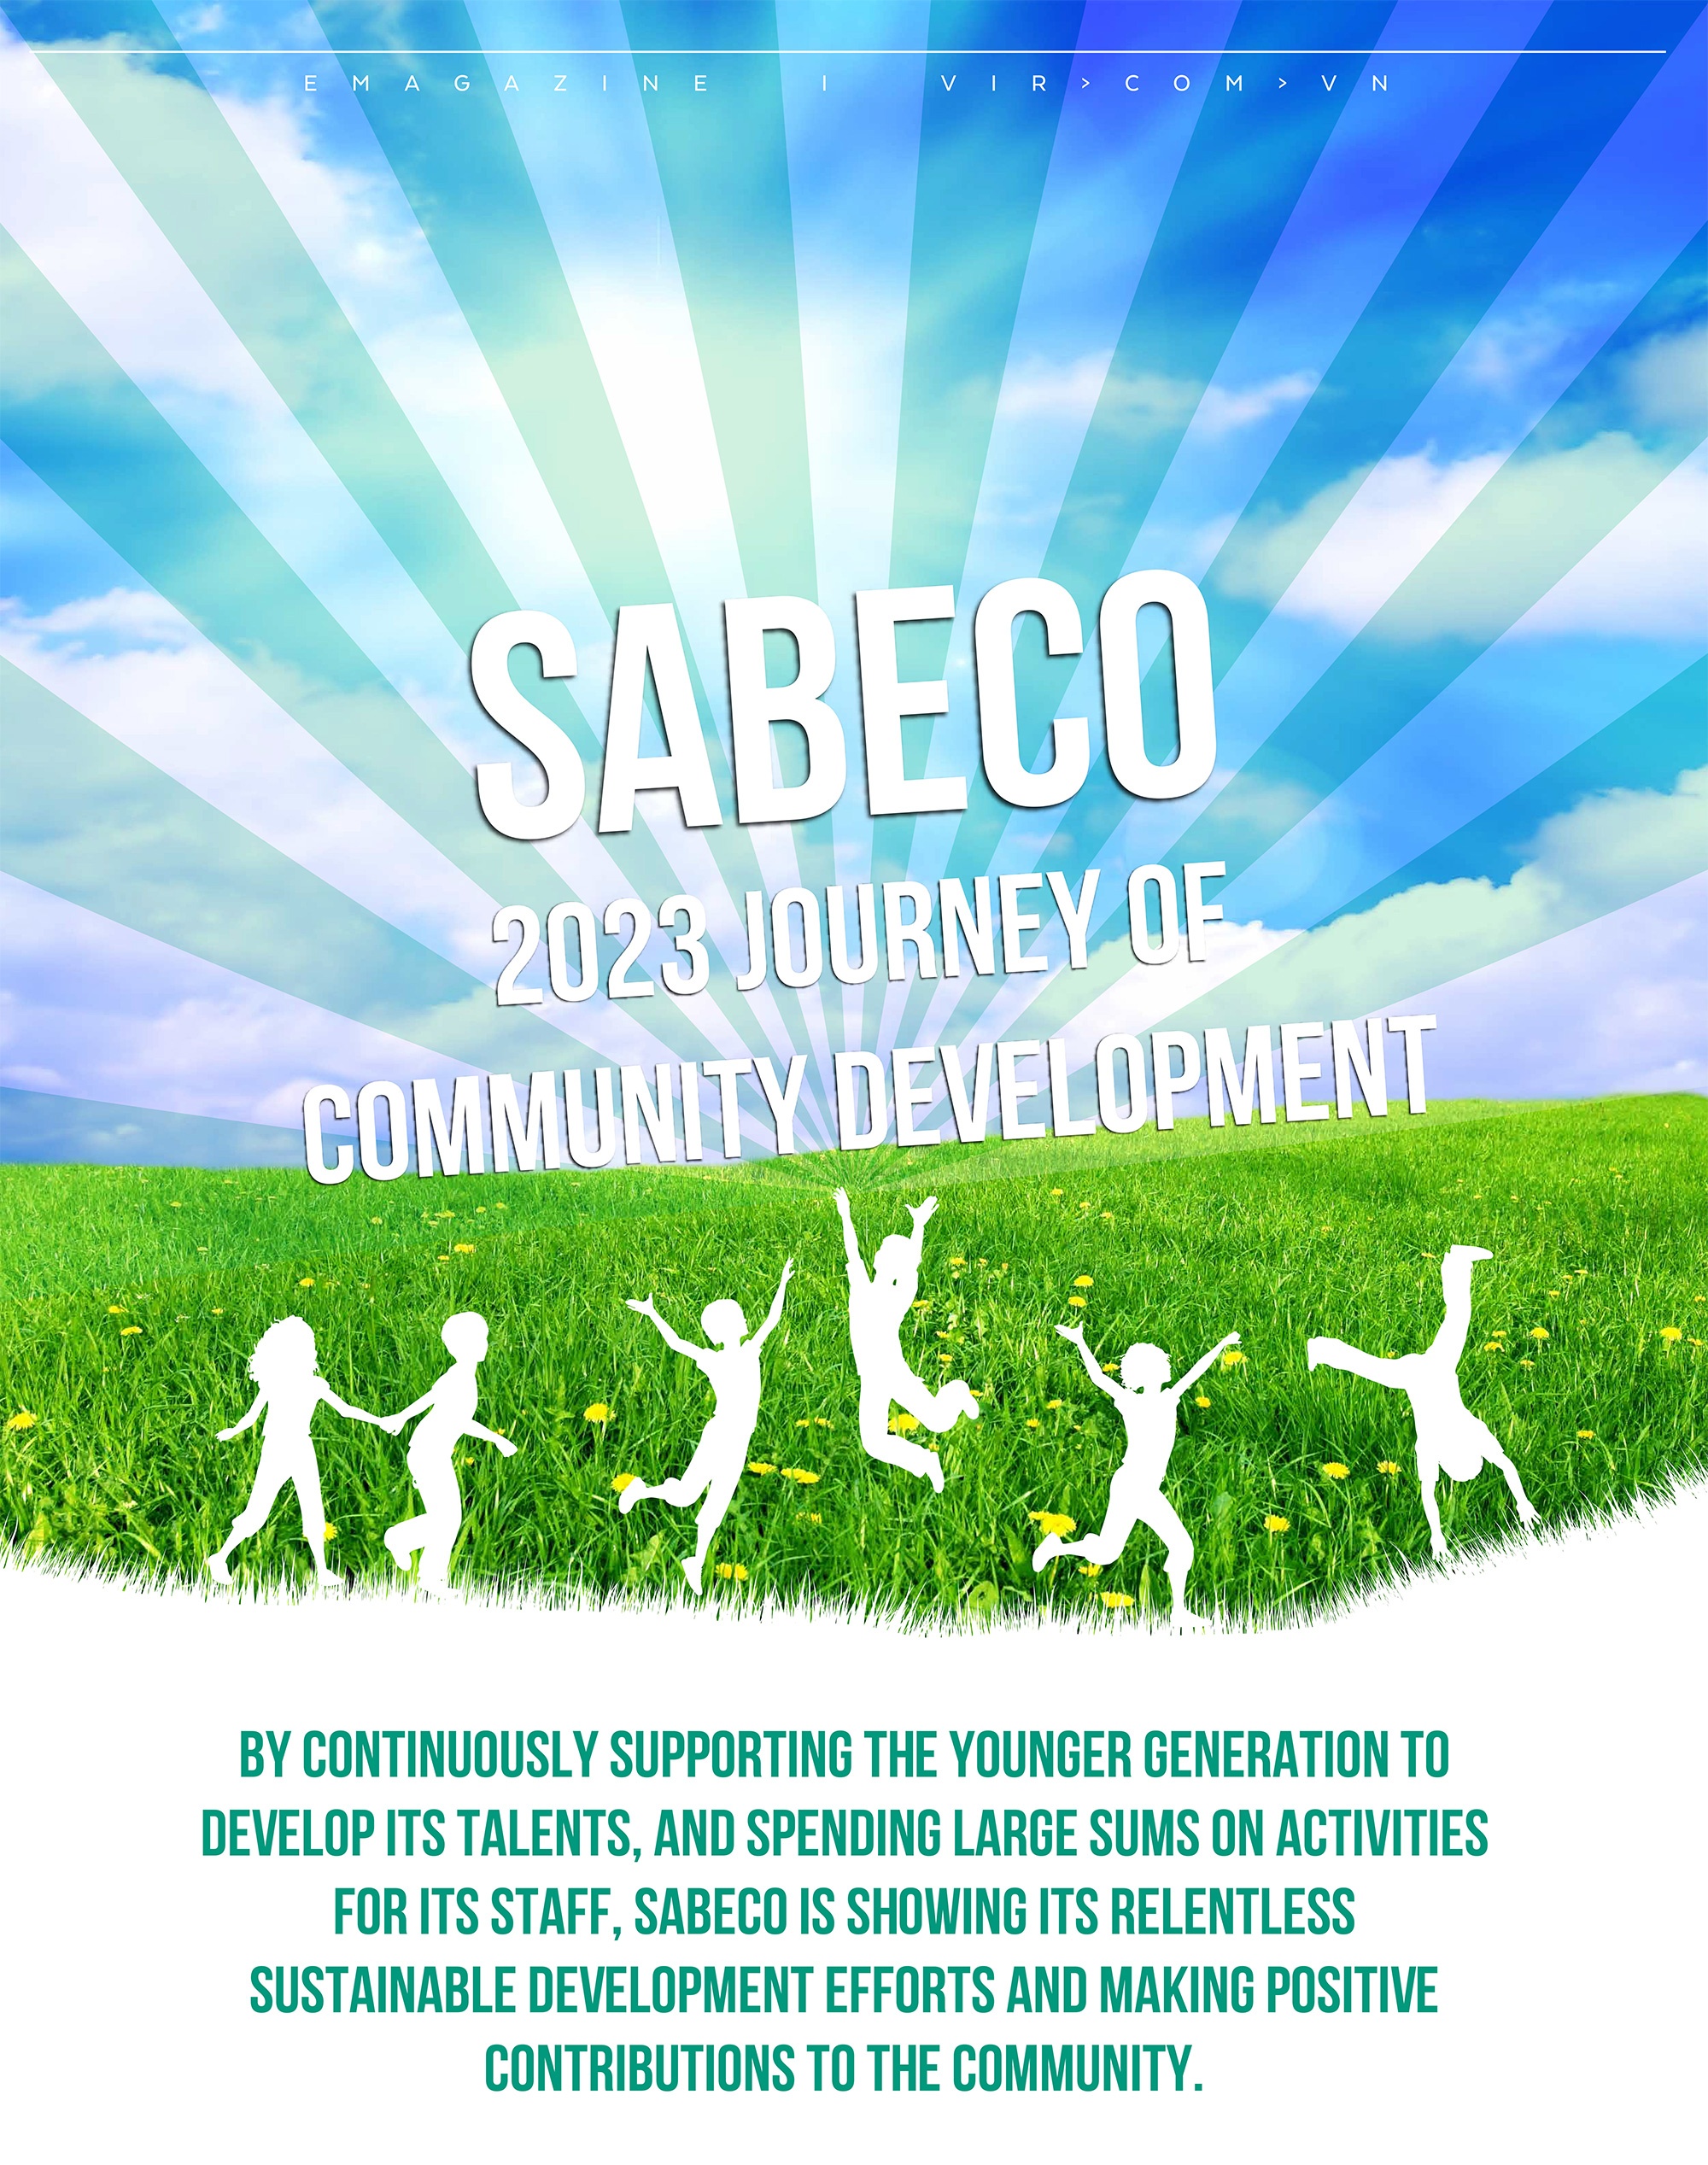 SABECO: 2023 journey of community development